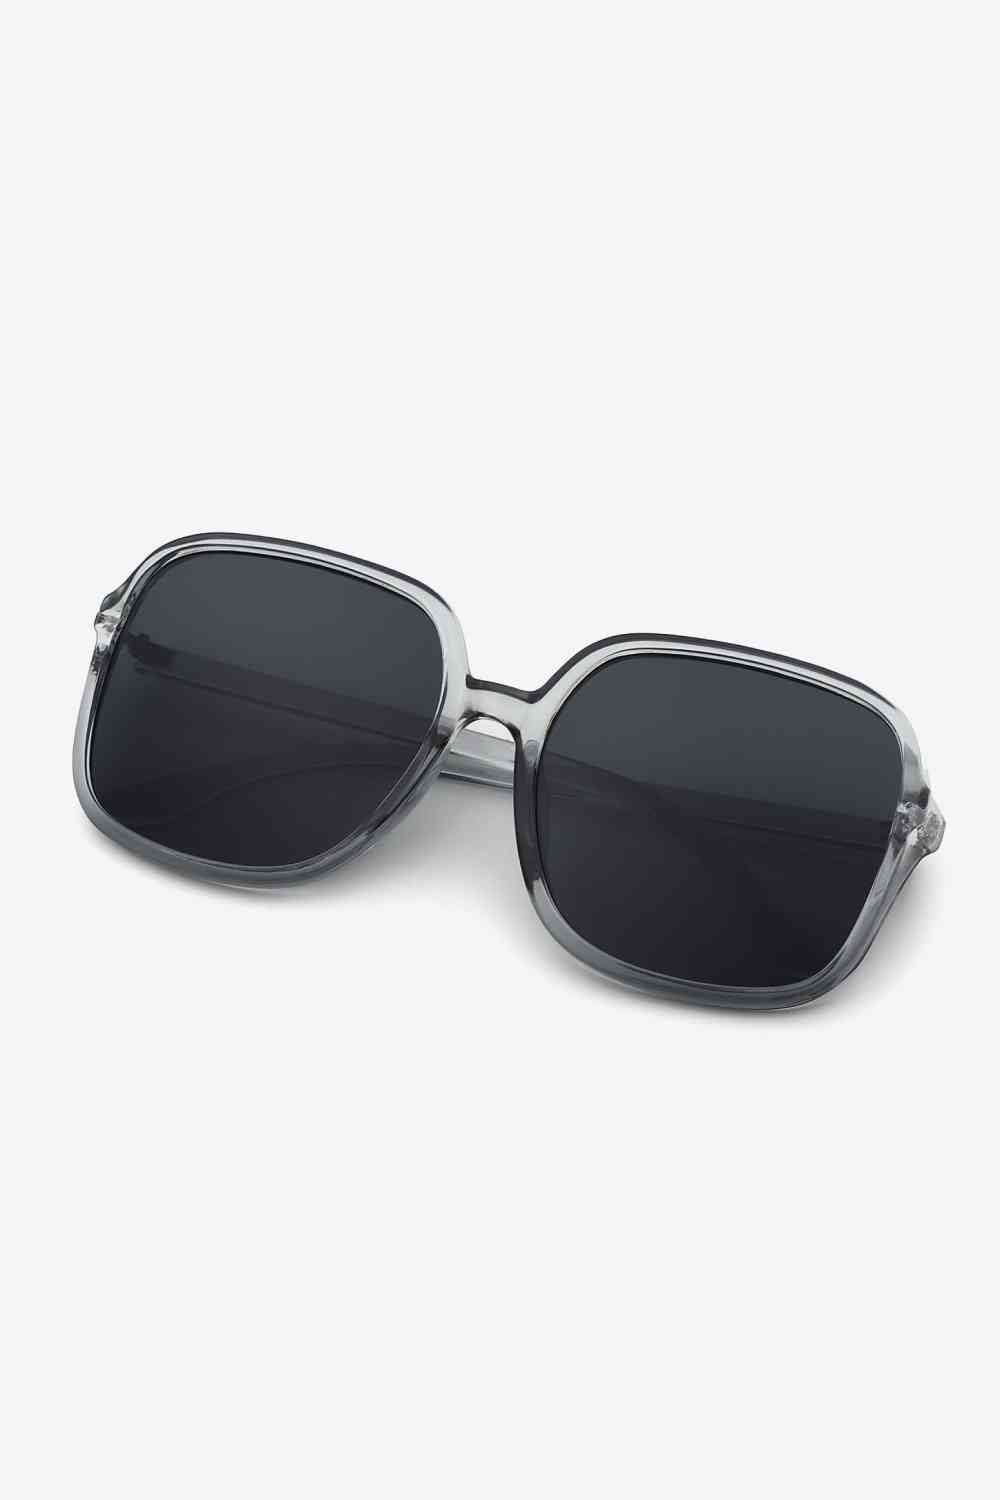 Polycarbonate Square Sunglasses Black One Size